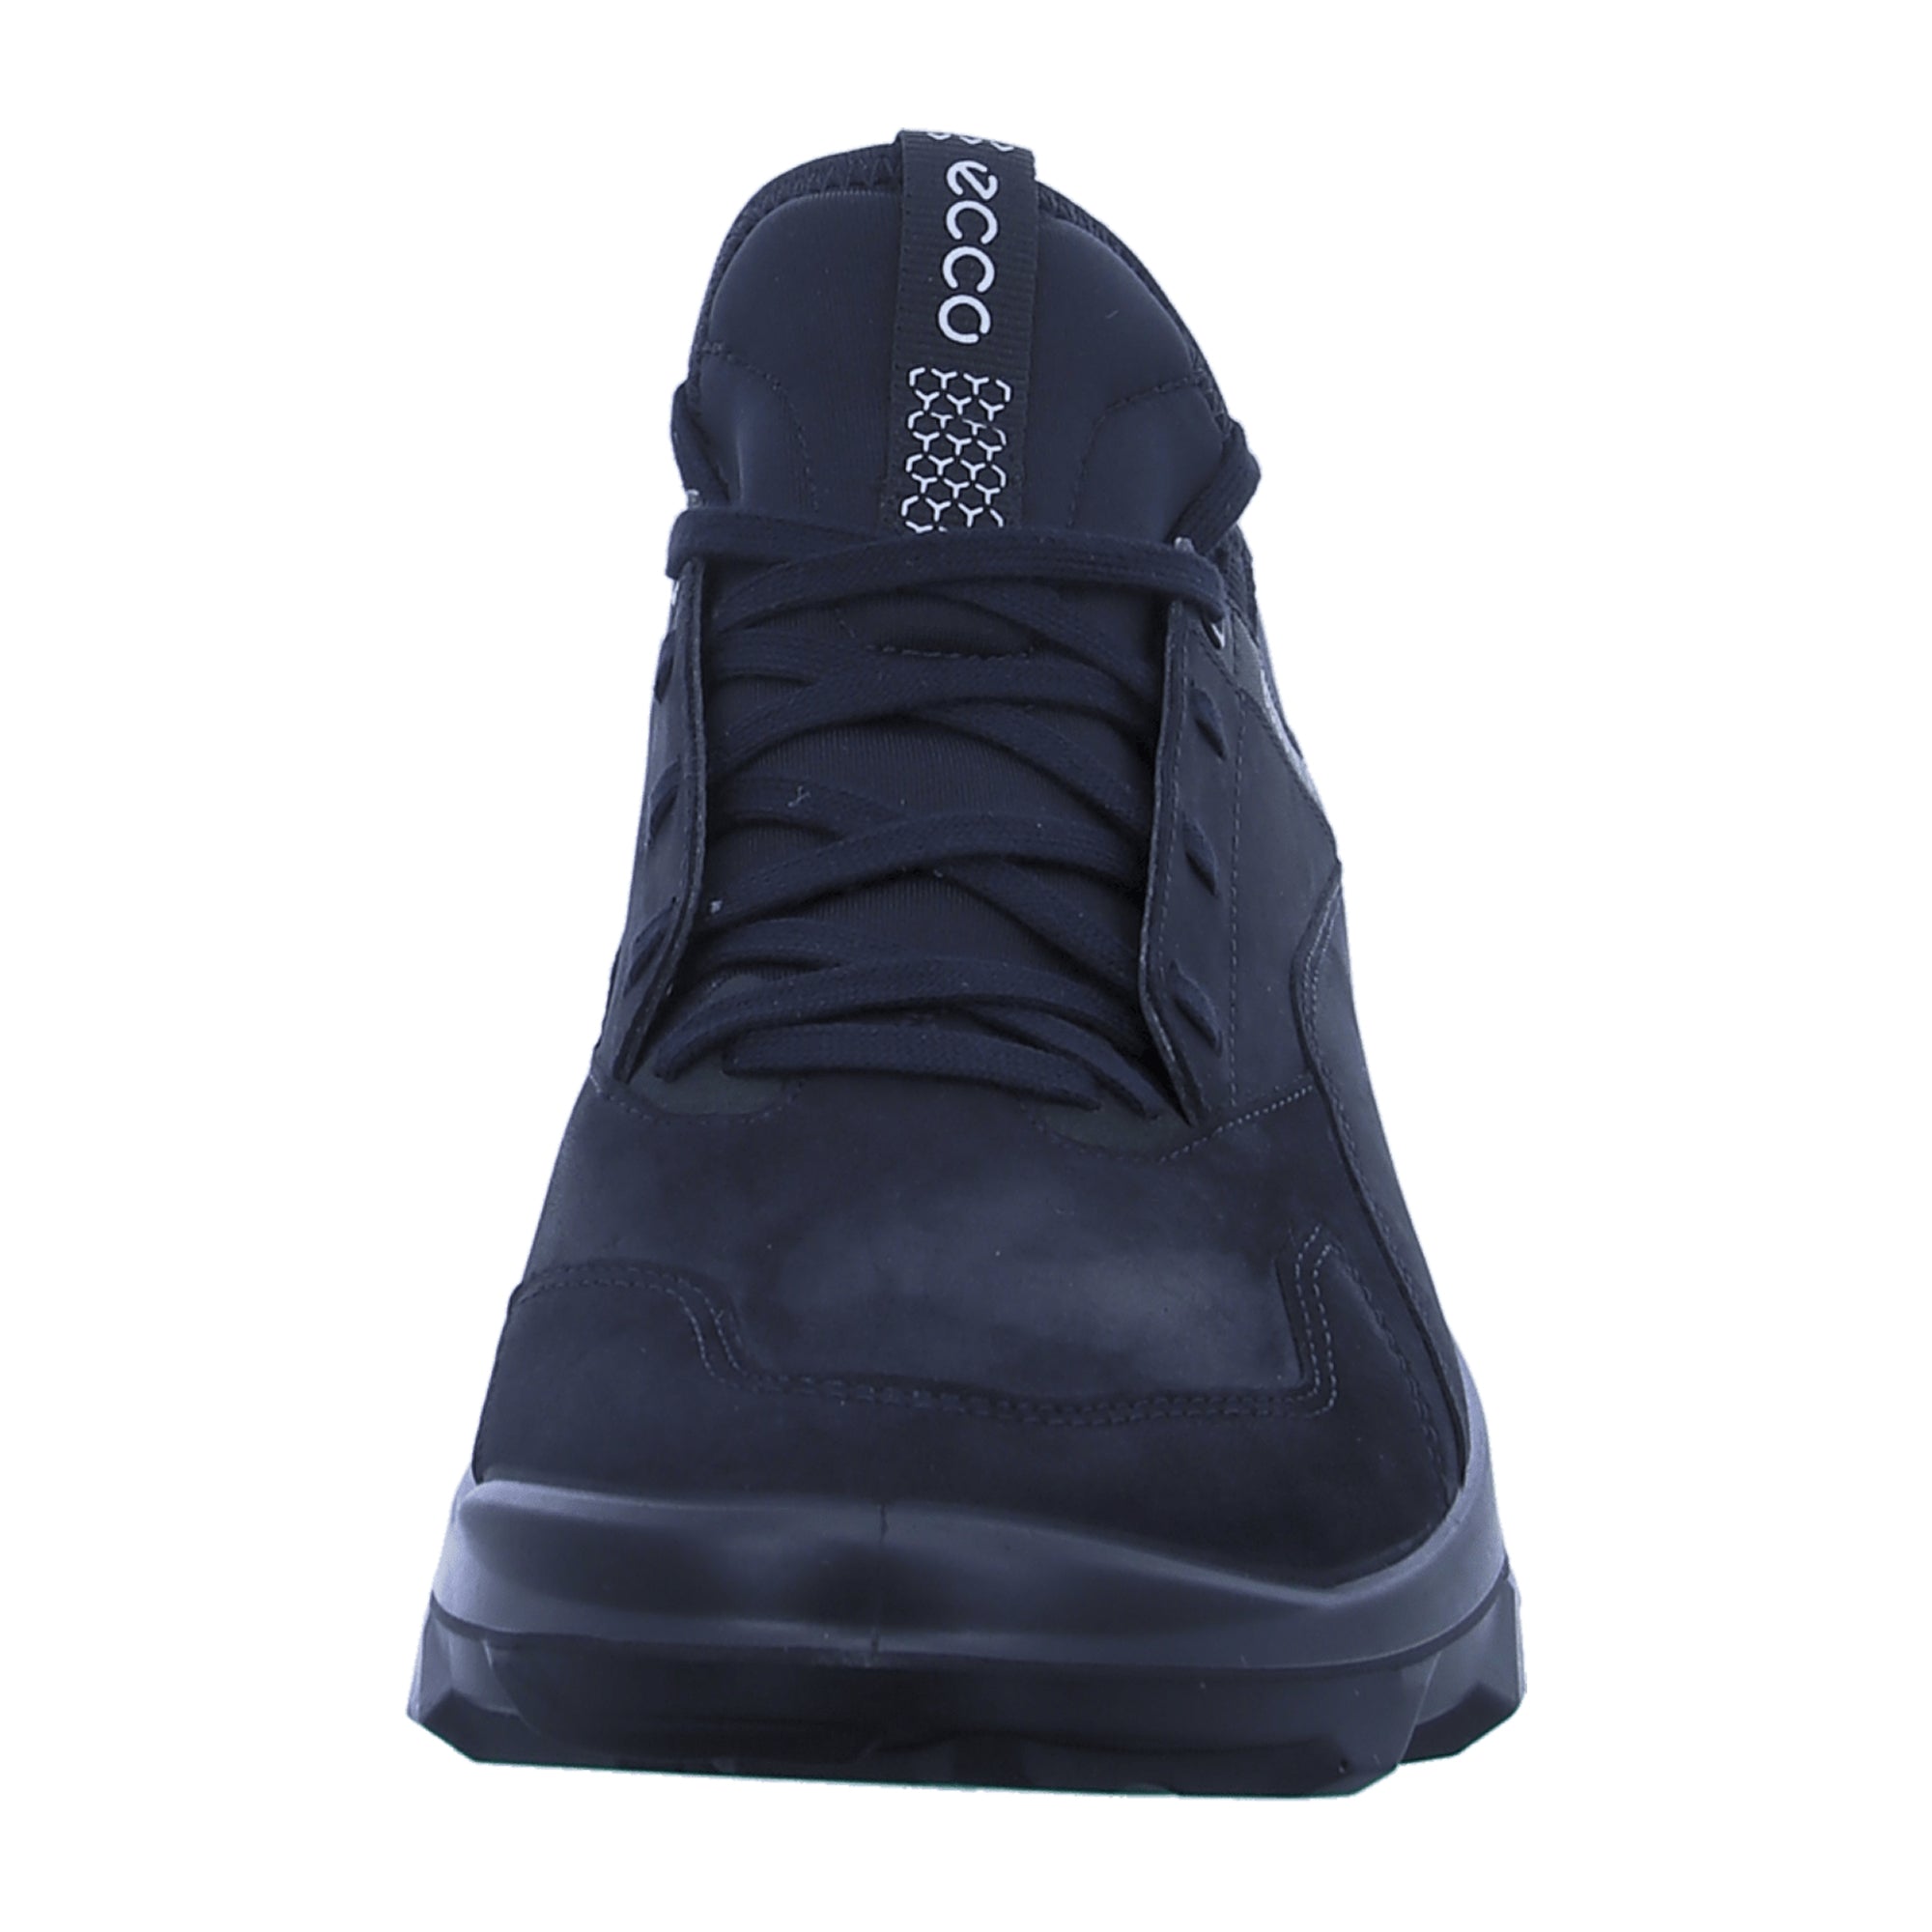 ECCO MX M Men's Black Nubuck Leather Lace-up Casual Shoes